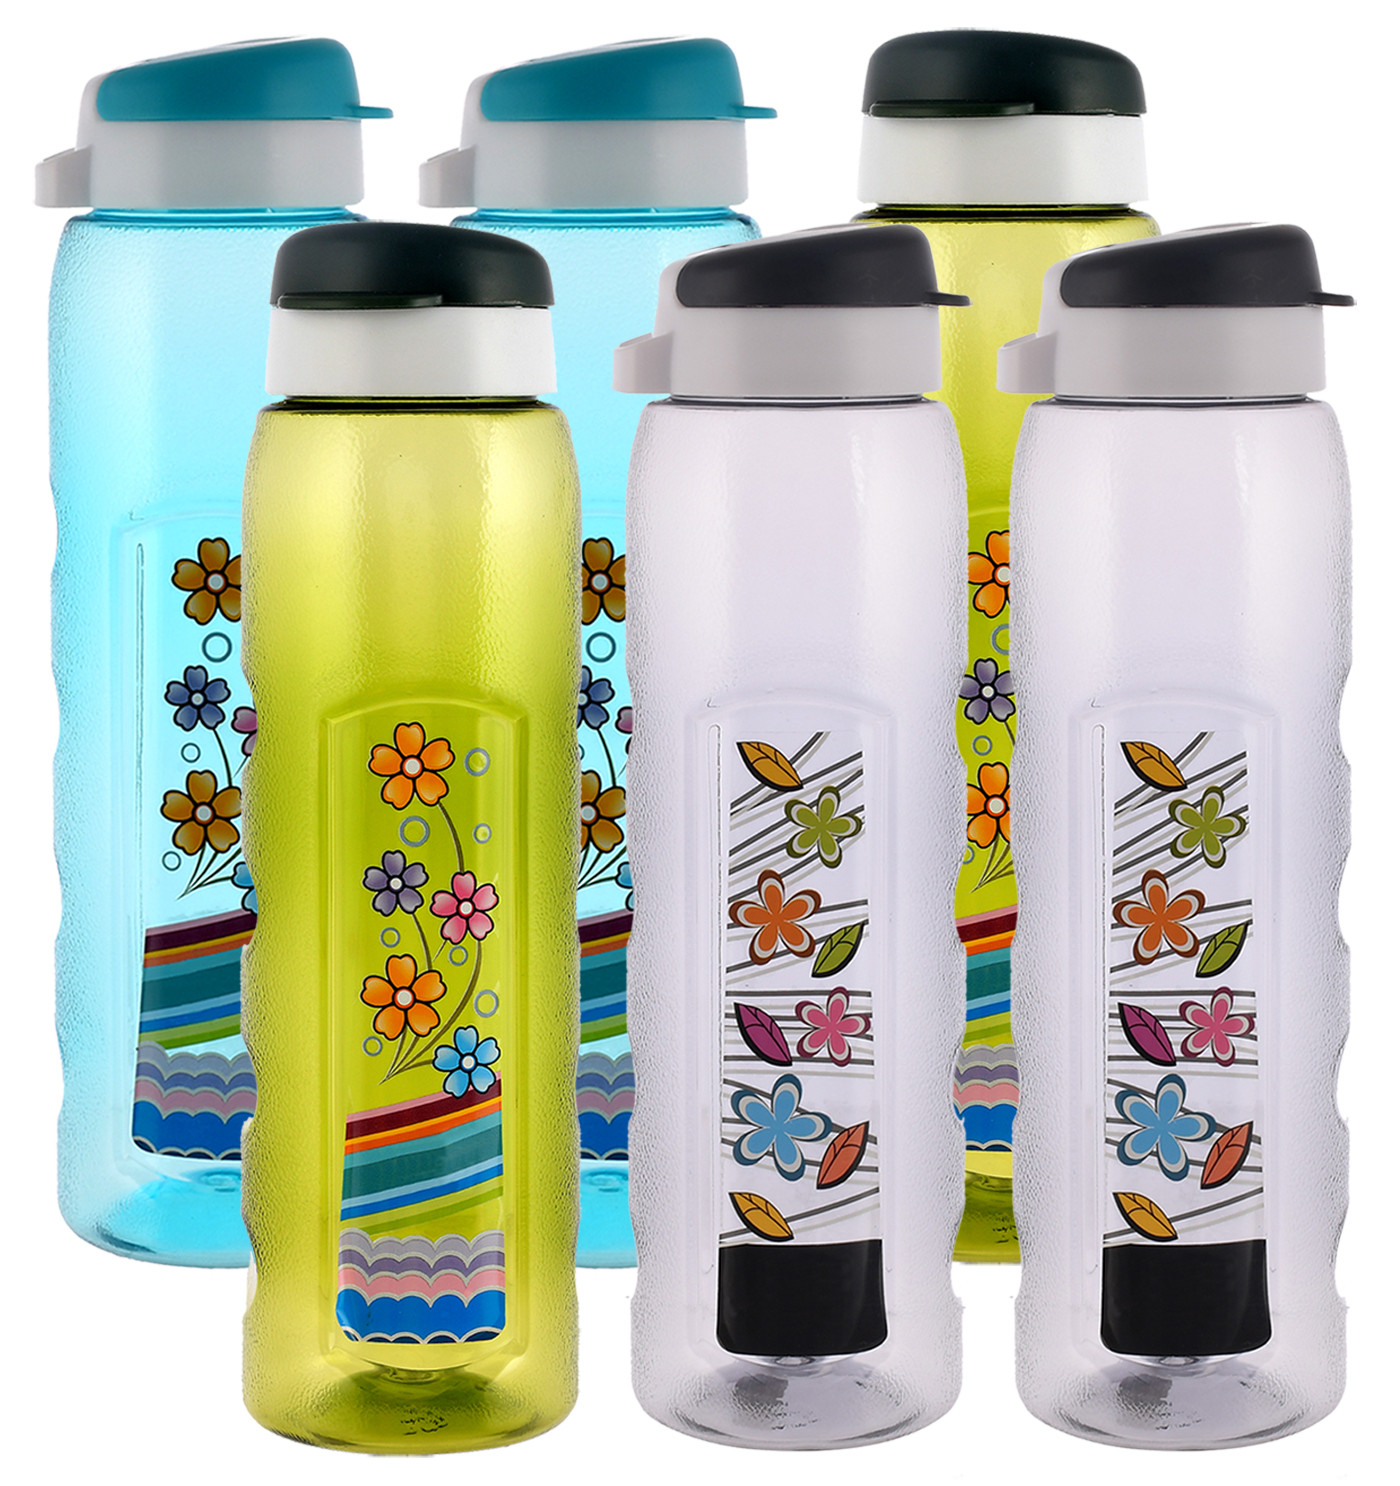 Kuber Industries Unbreakable BPA & Leak Free Plastic Water Bottle With Sipper- 1 Litre, Pack of 6 (Sky Blue & Green & Black)